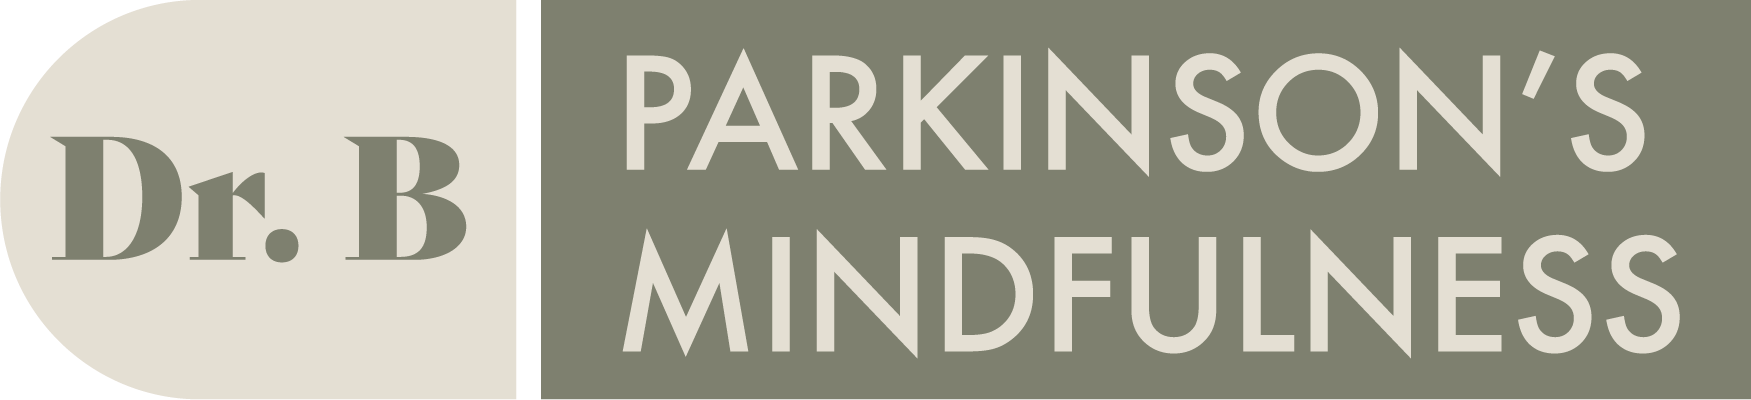 Parkinson's Mindfulness